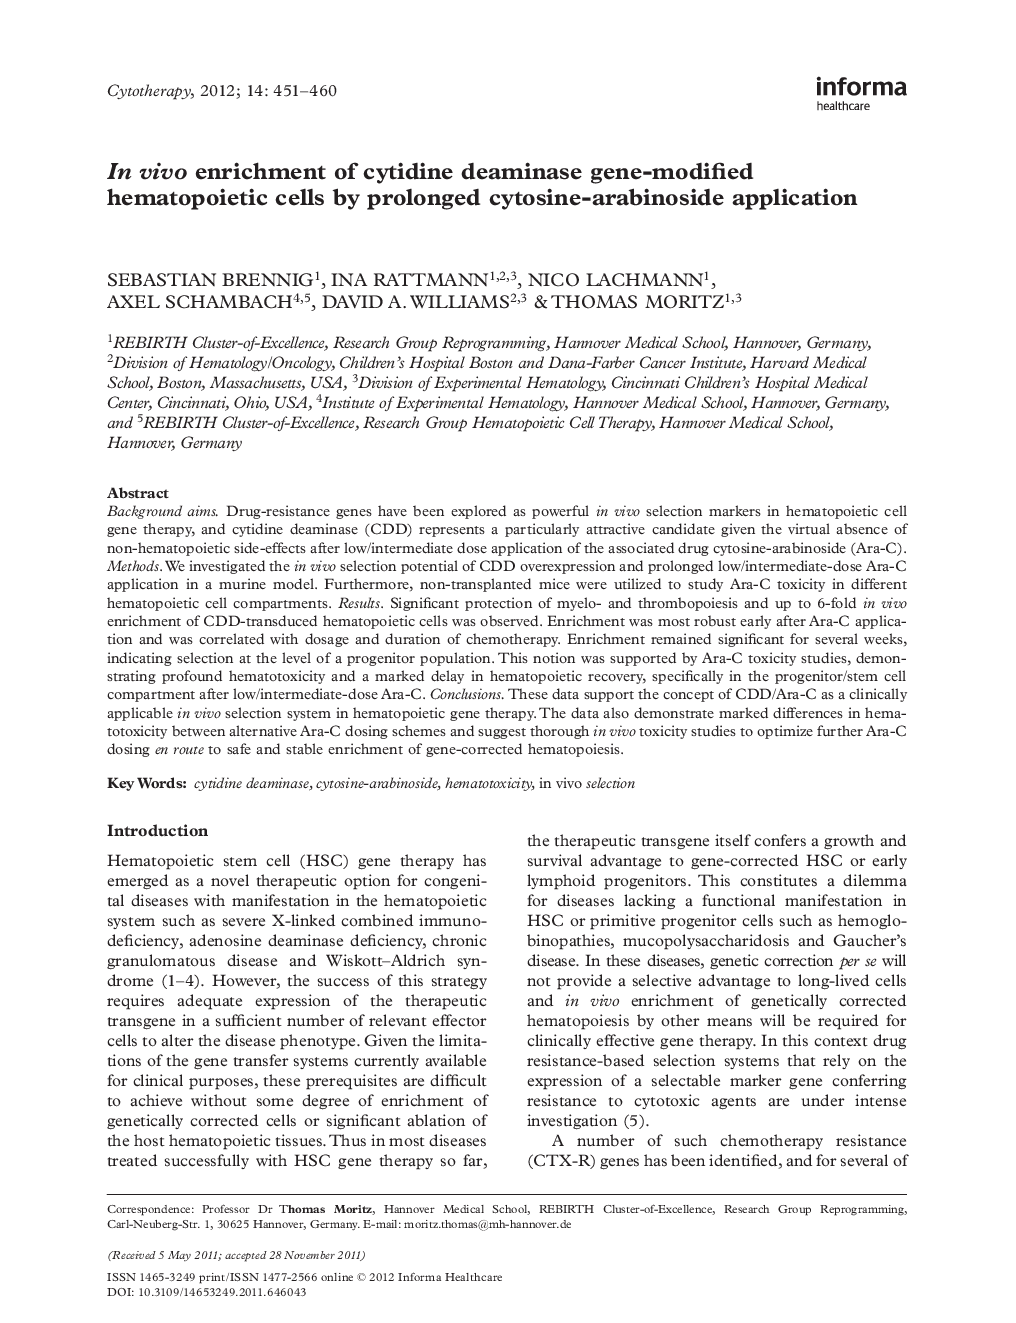 In vivo enrichment of cytidine deaminase gene-modified hematopoietic cells by prolonged cytosine-arabinoside application